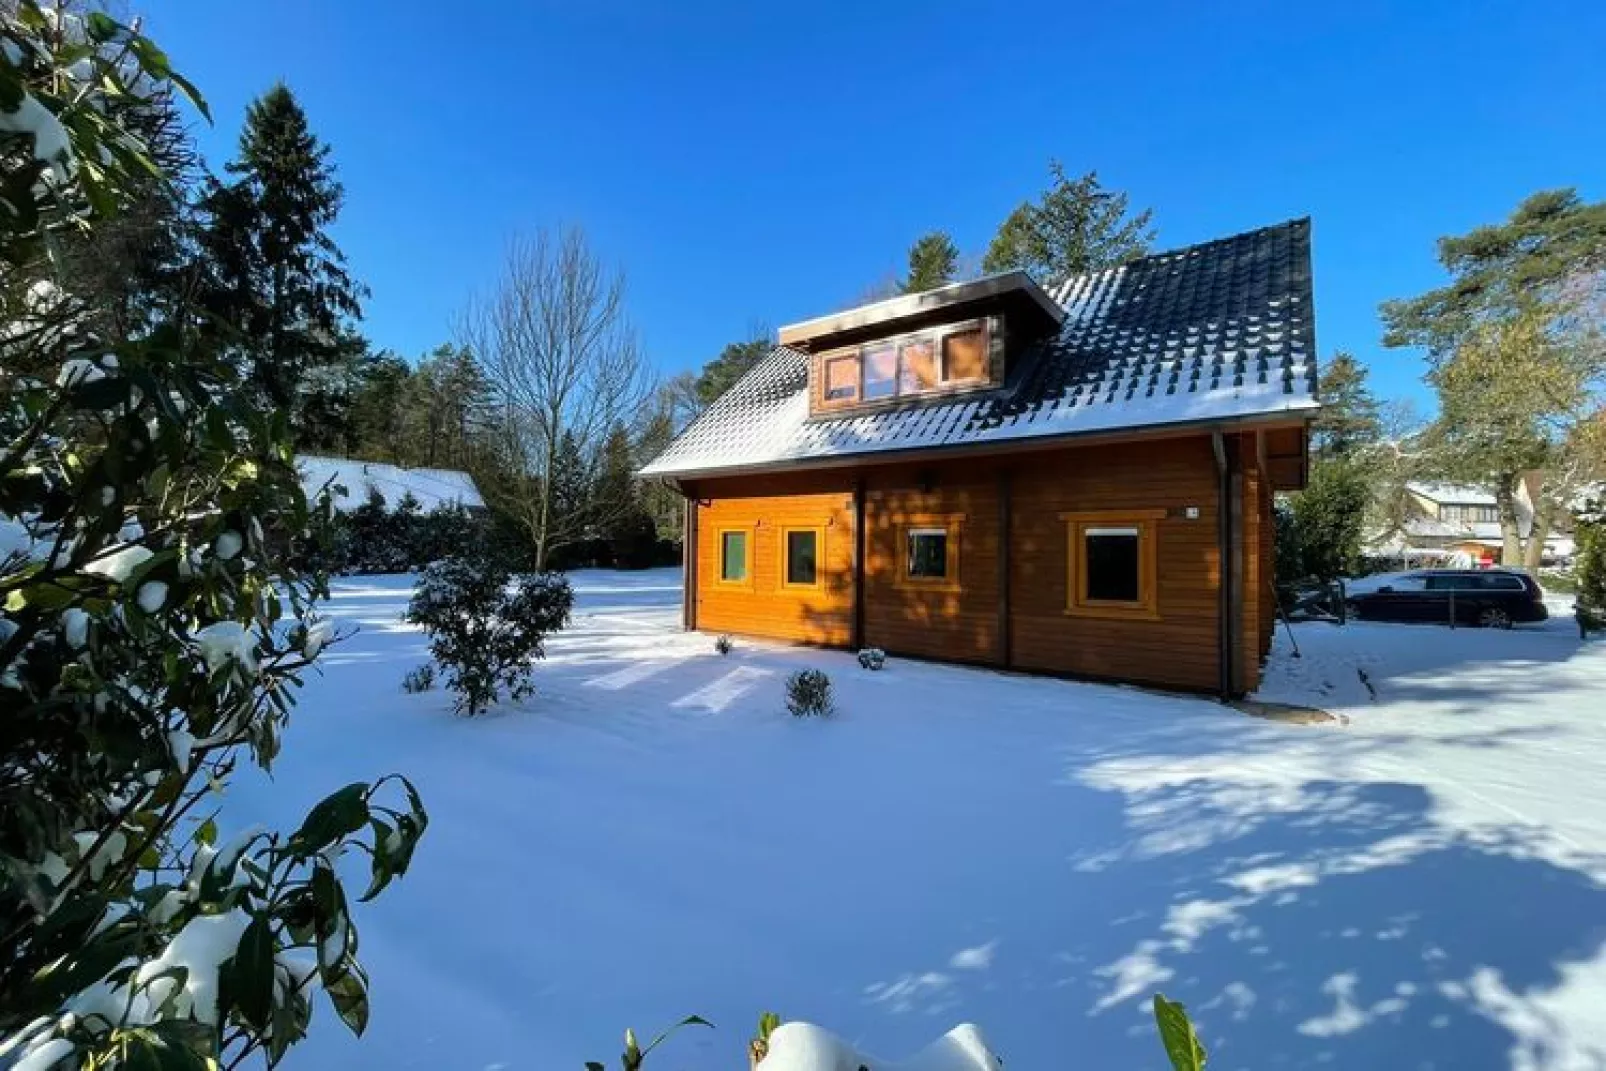 Villa Wisselse Veen-Exterieur winter